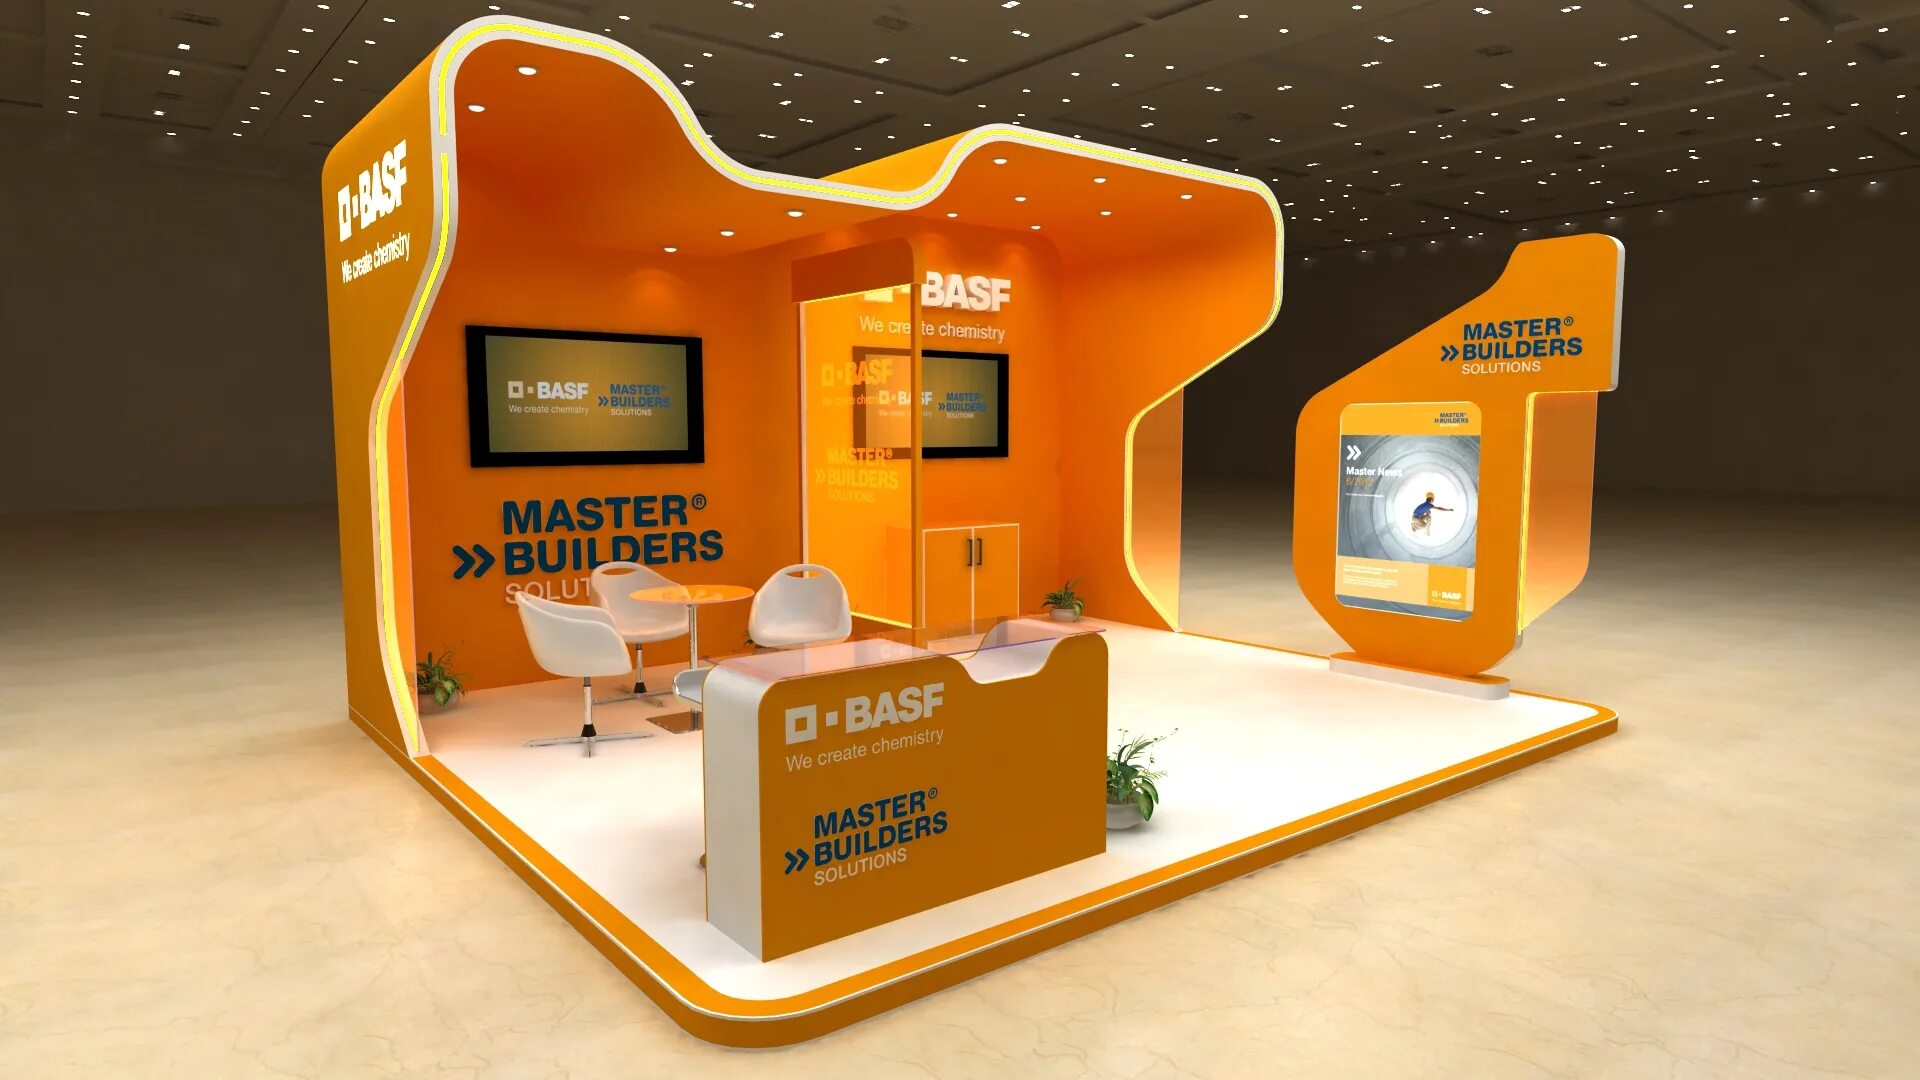 Master builders. Master Builders solutions. Master Builders solutions офис. Master Builders solutions uk Ltd.. Booth.